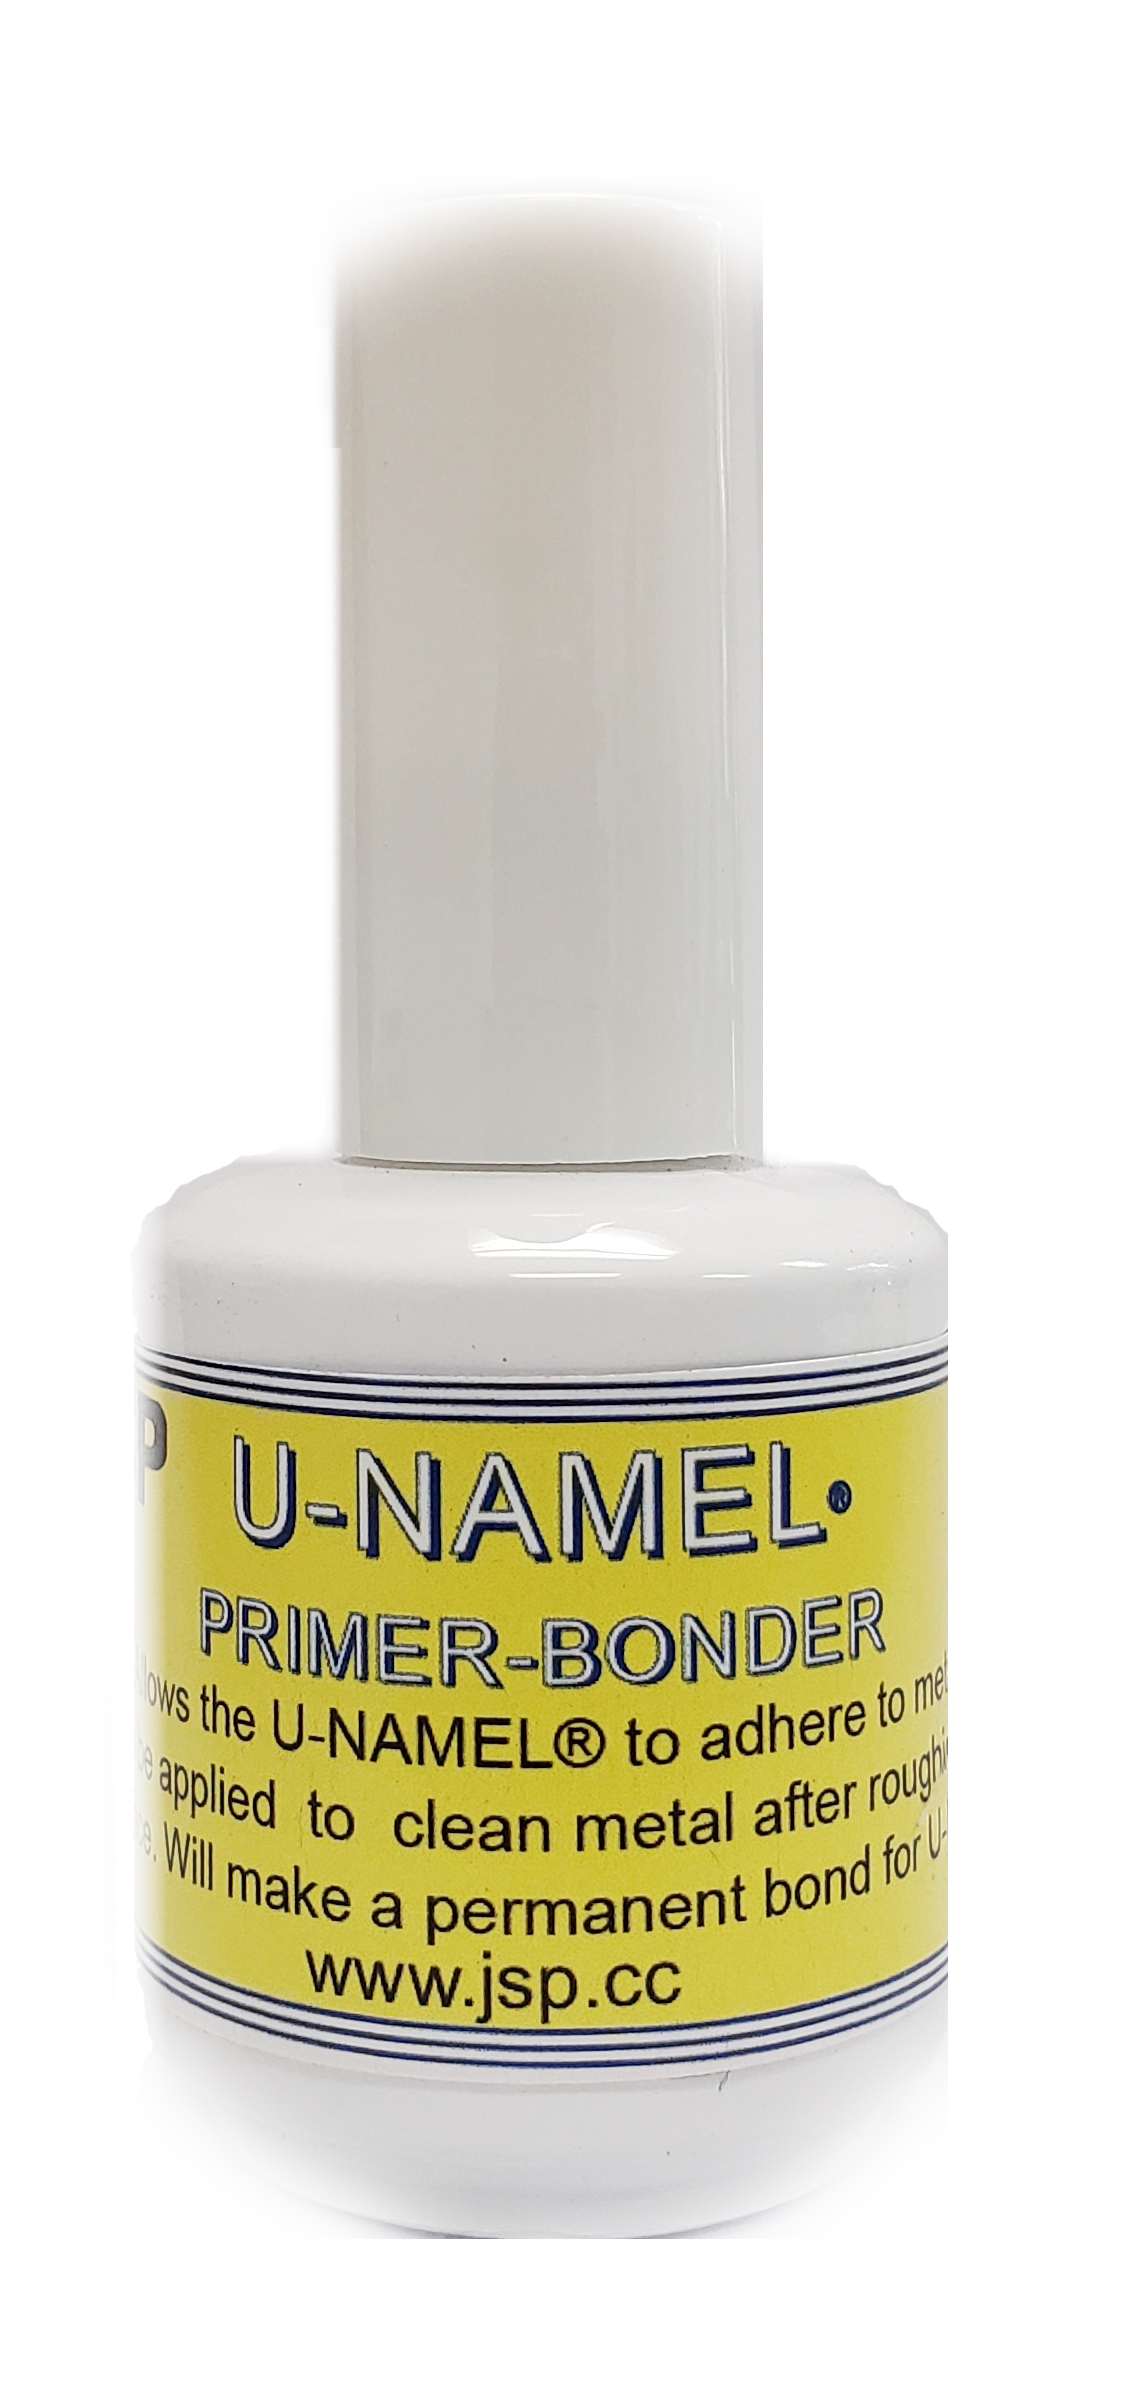 U-NAMEL® BOND LIQUID with brush - Click Image to Close